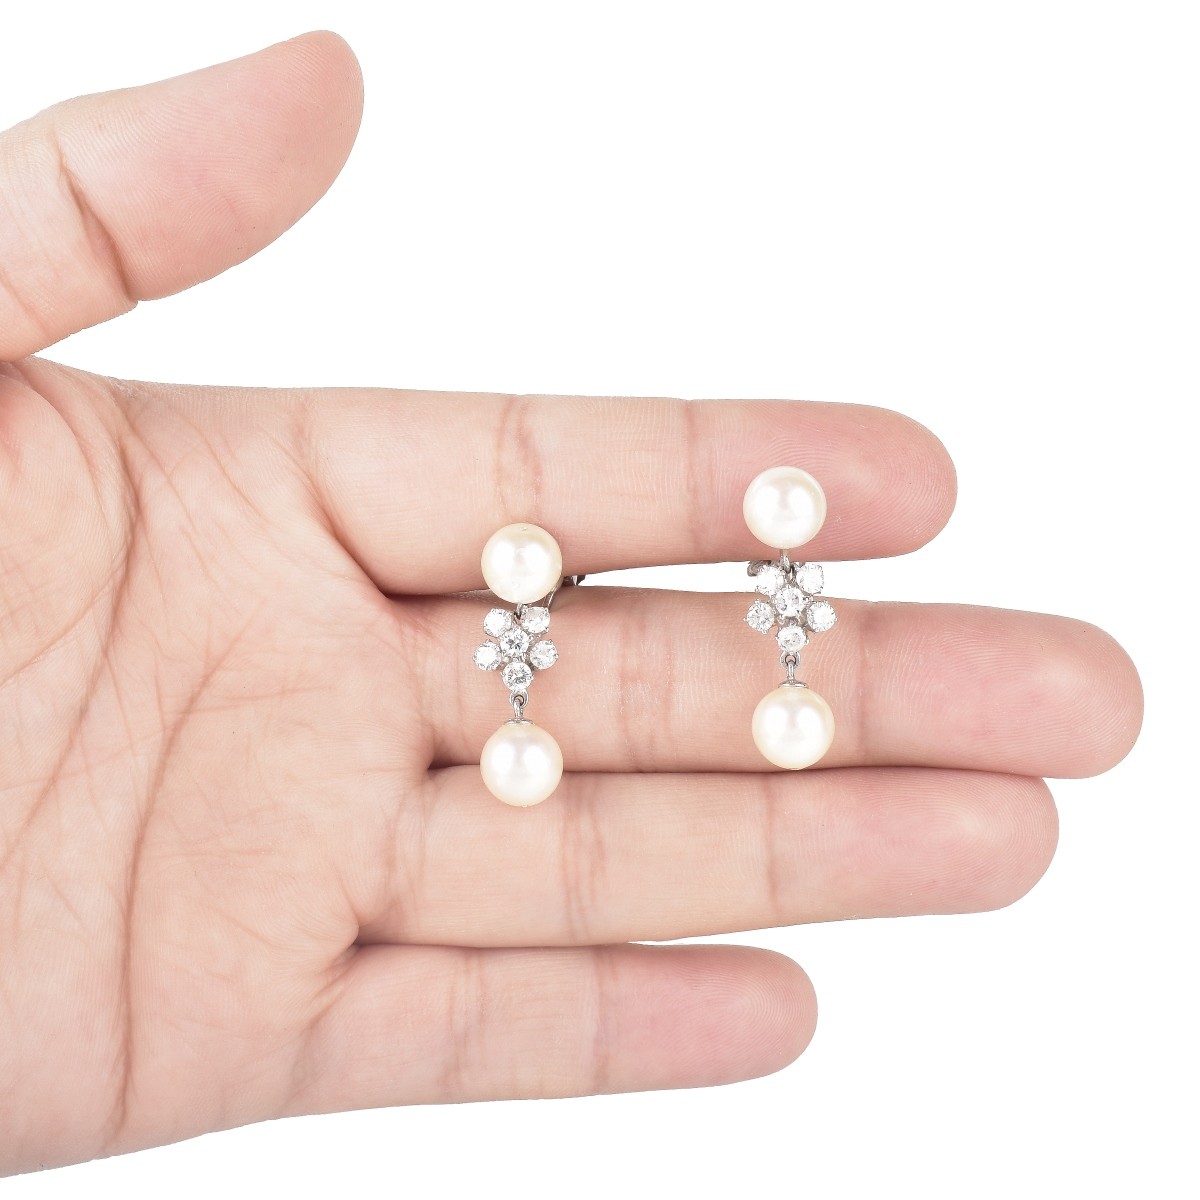 Vintage Pearl and Diamond Earrings